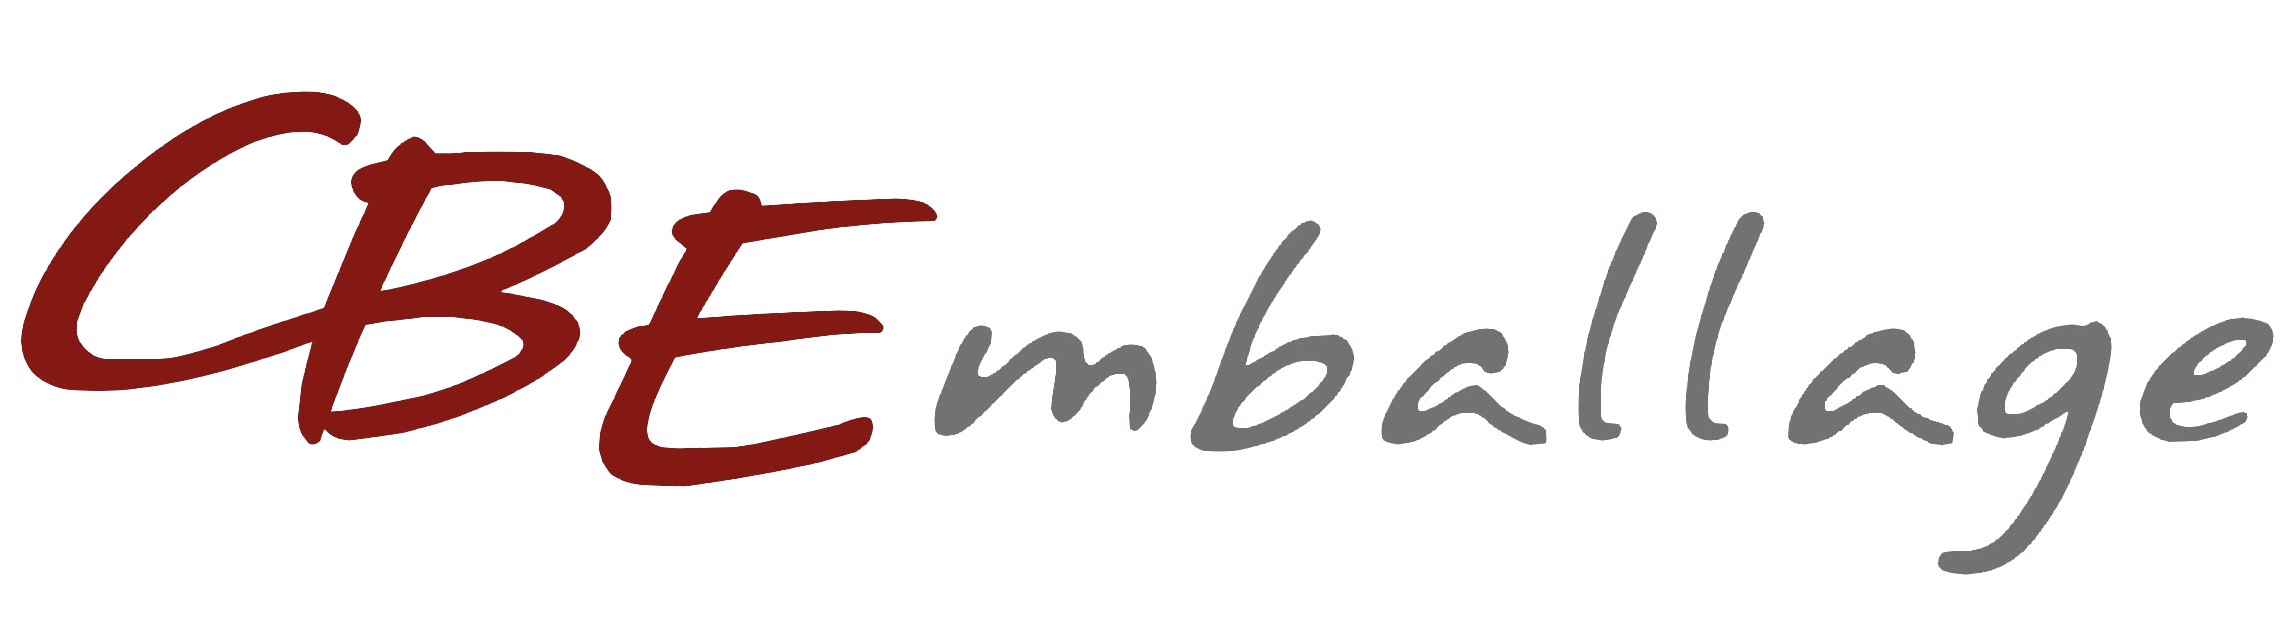 CB Emballage Logo simple